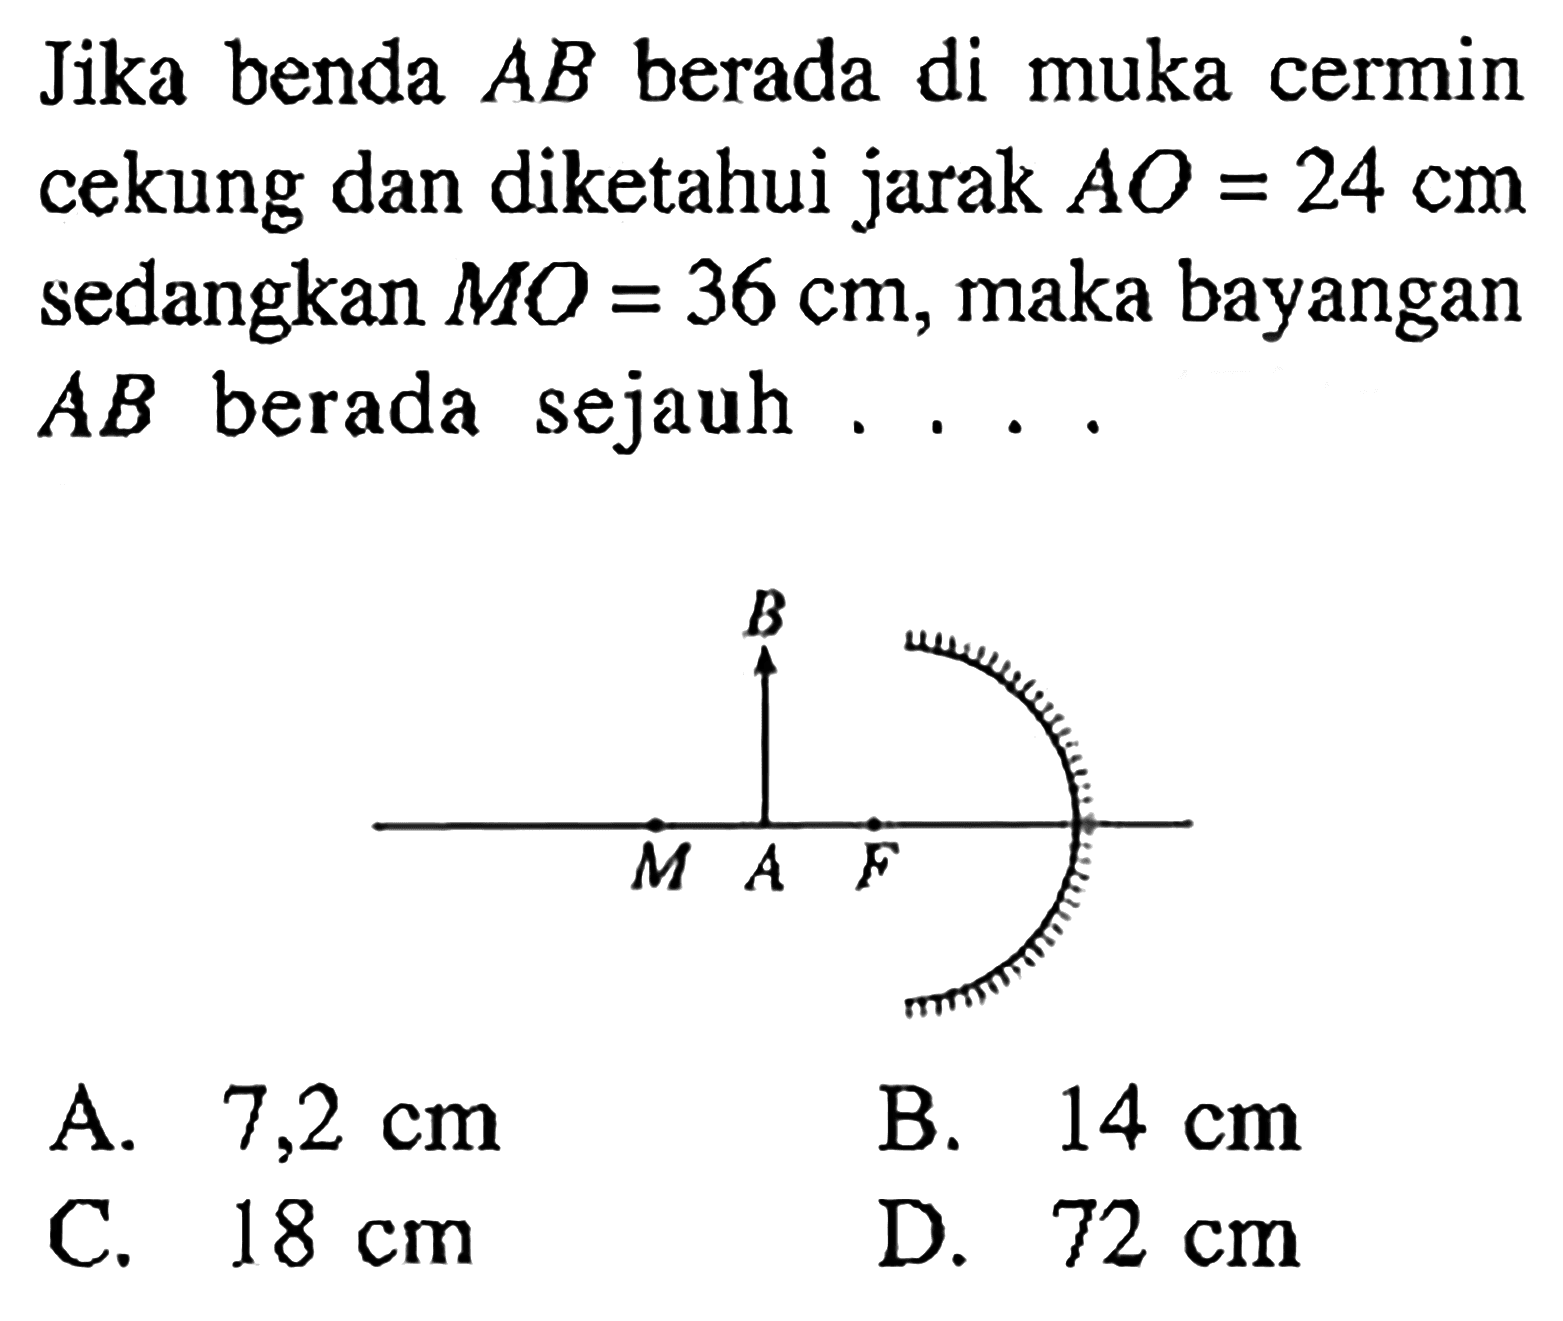 Jika benda AB berada di muka cermin cekung dan diketahui jarak AO=24 cm sedangkan MO=36 cm, maka bayangan A B berada sejauh.... B M A F